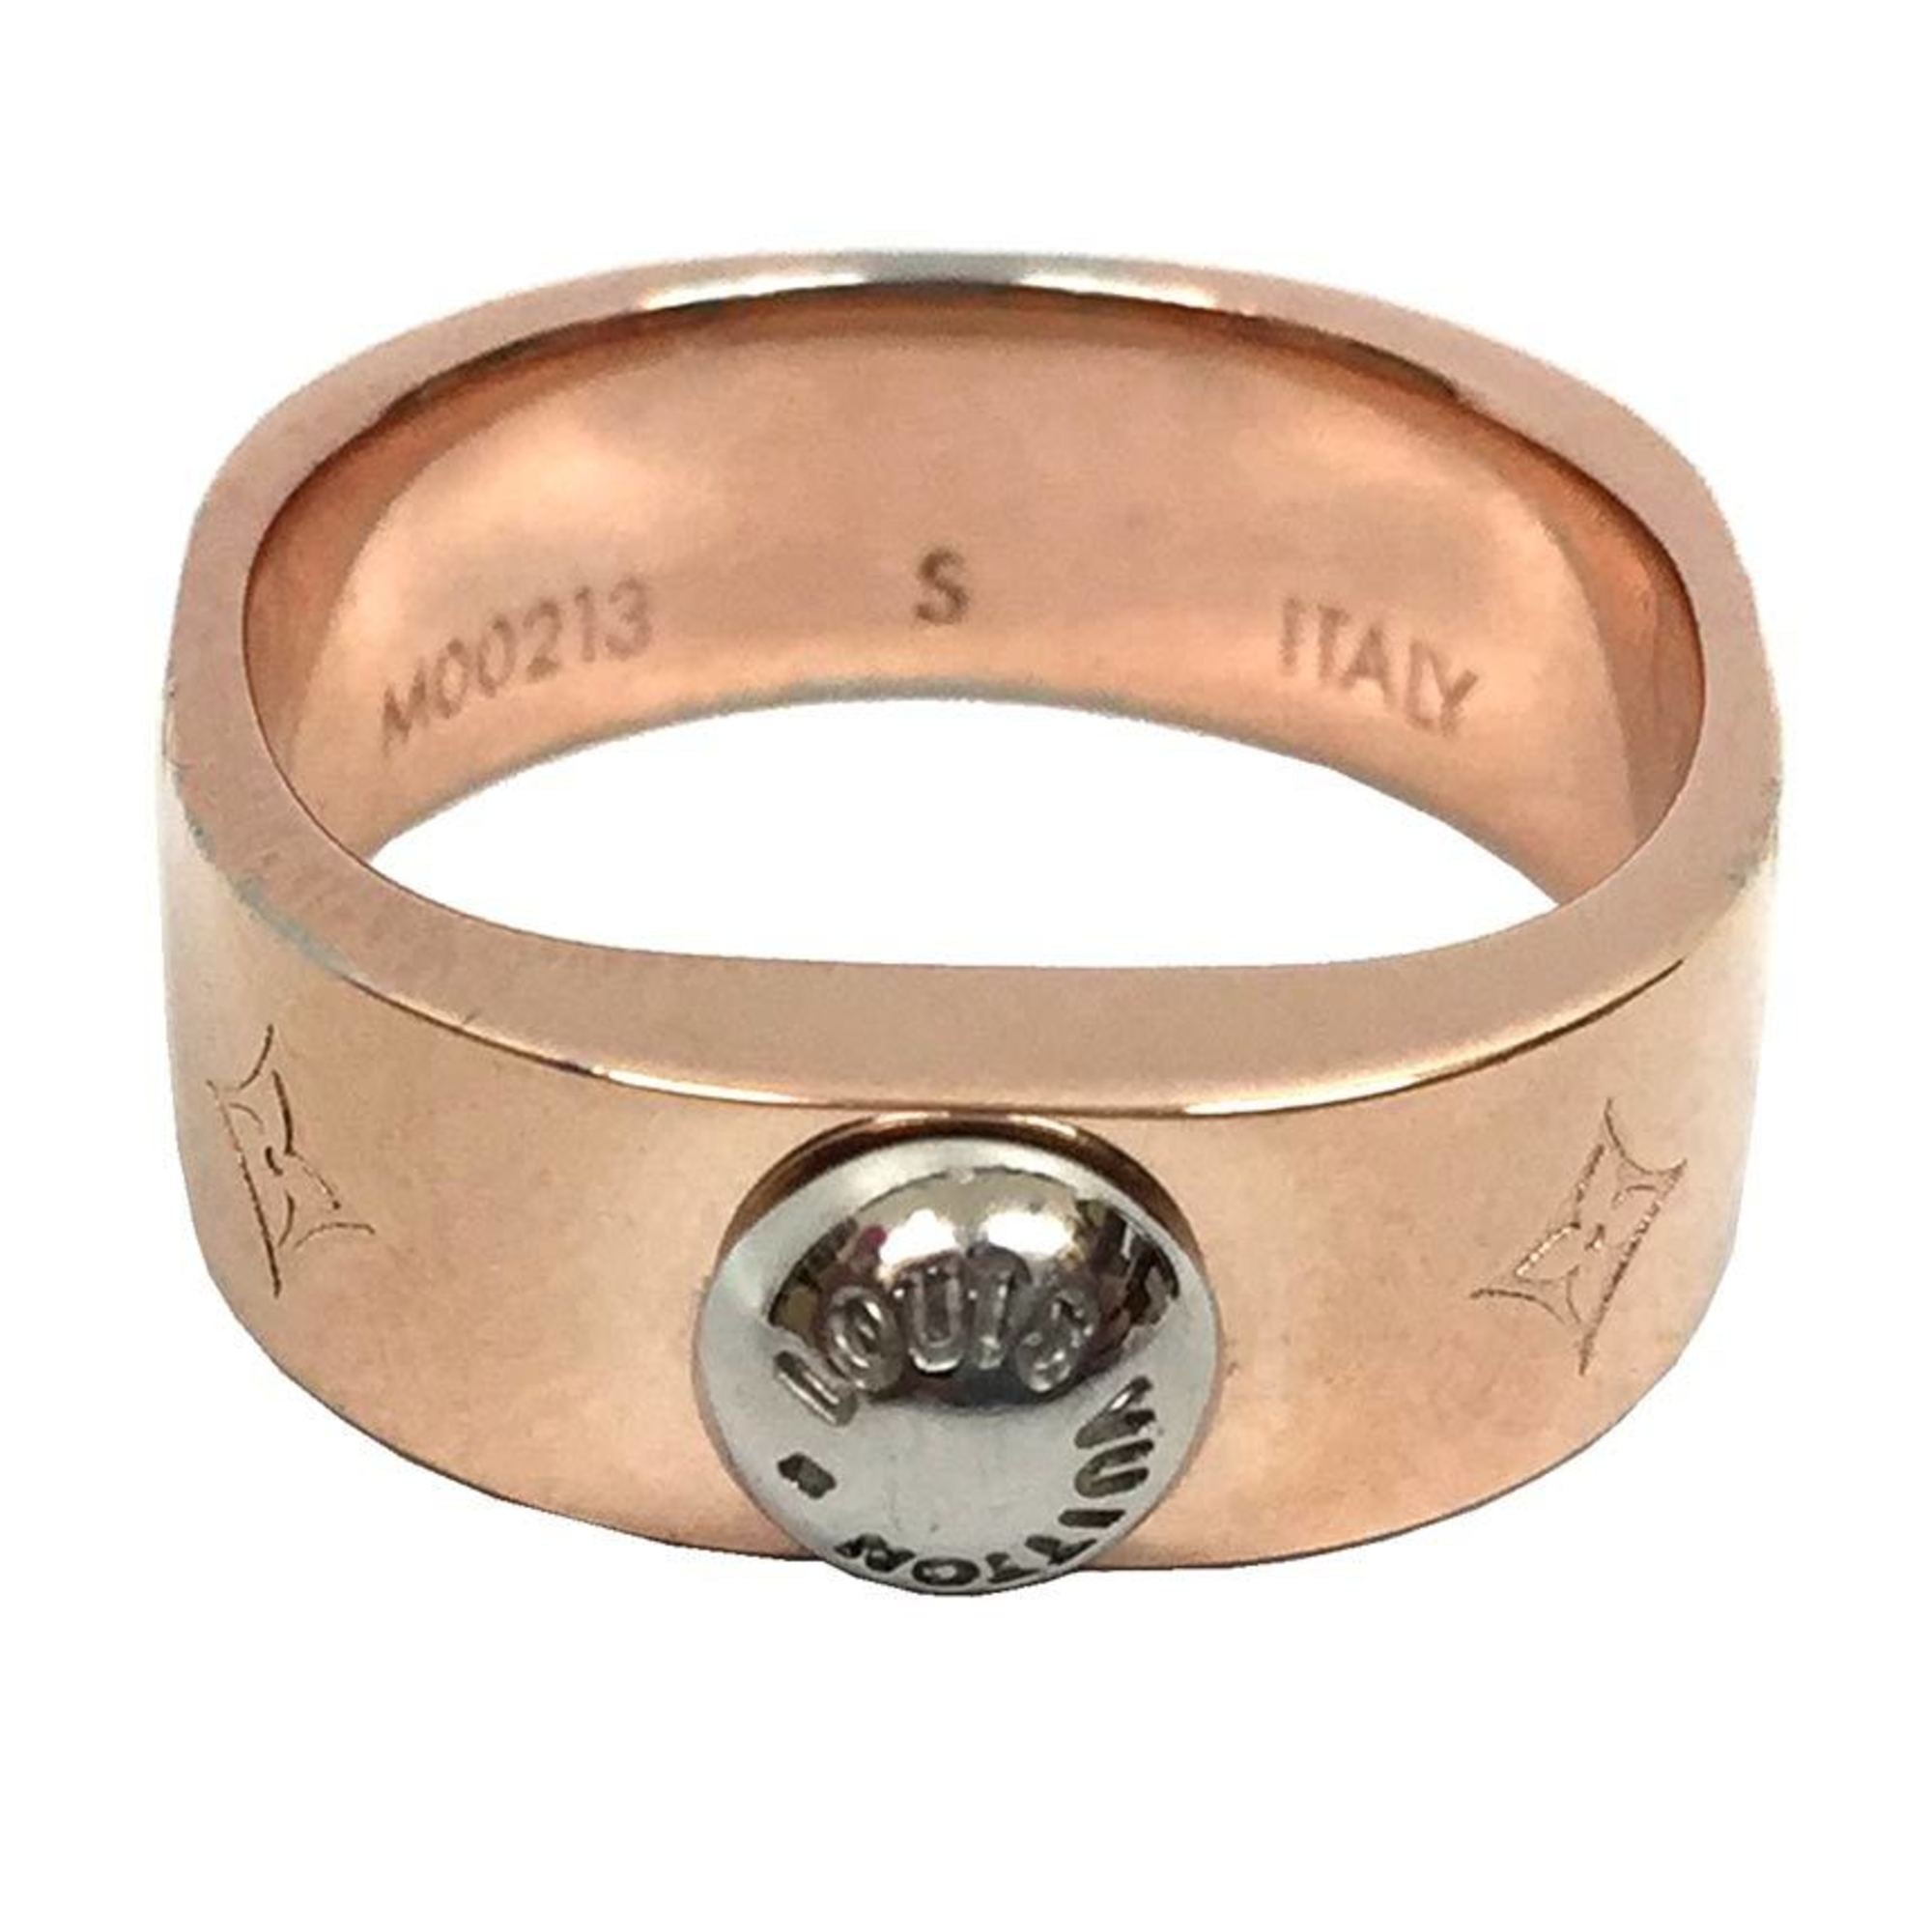 Louis Vuitton Palladium Finish Gold 2 Tone Nanogram Ring - Size S - M00216  $400